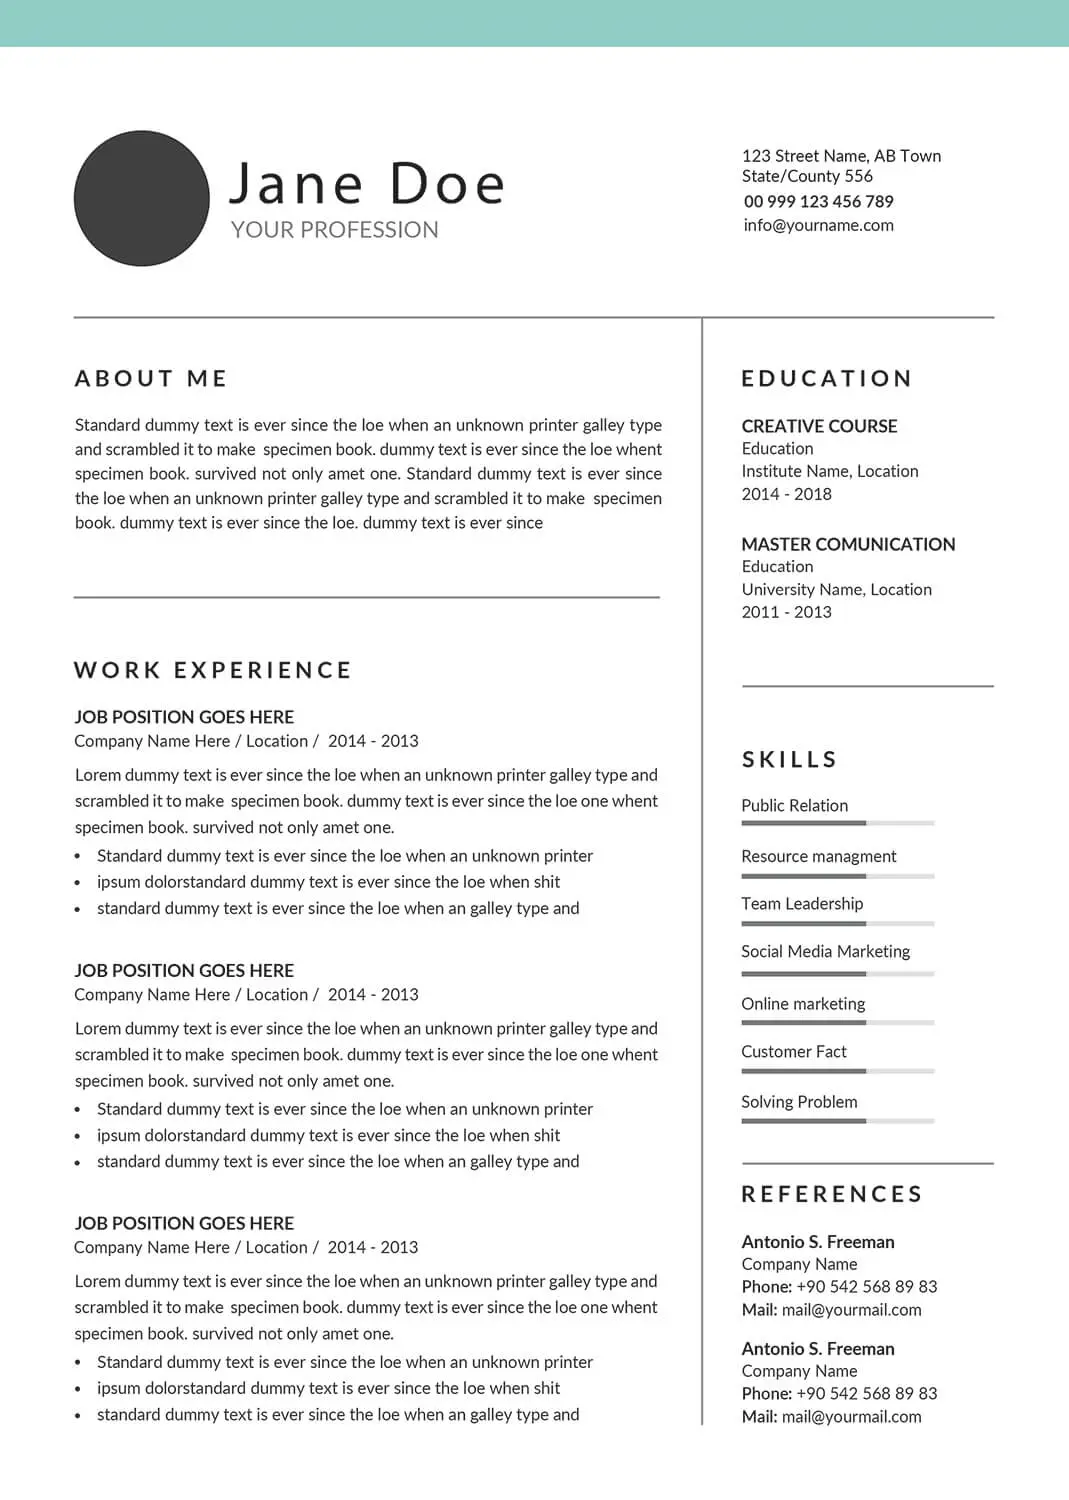 java-developer-resume